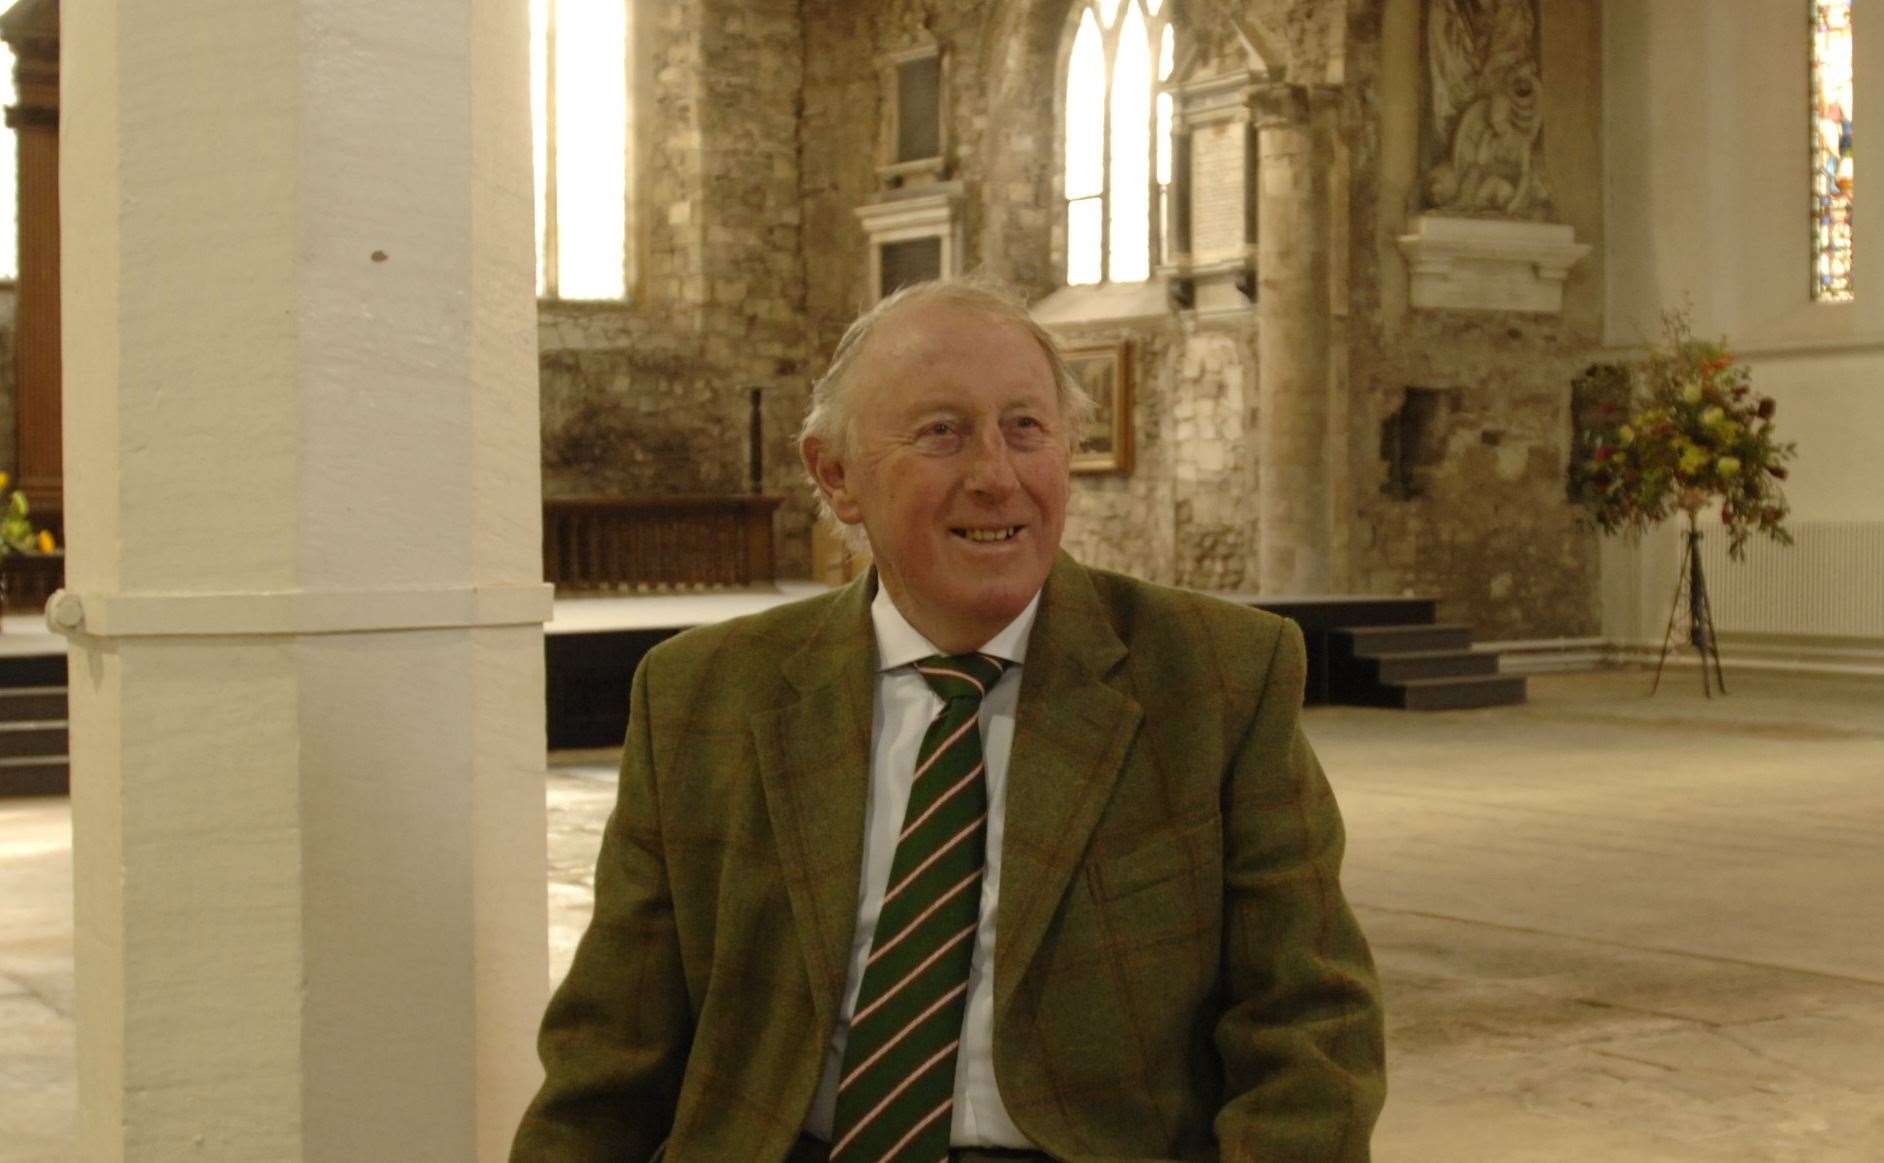 John Bragg in St Mary's Church Sandwich in 2007. Picture: Terry Scott